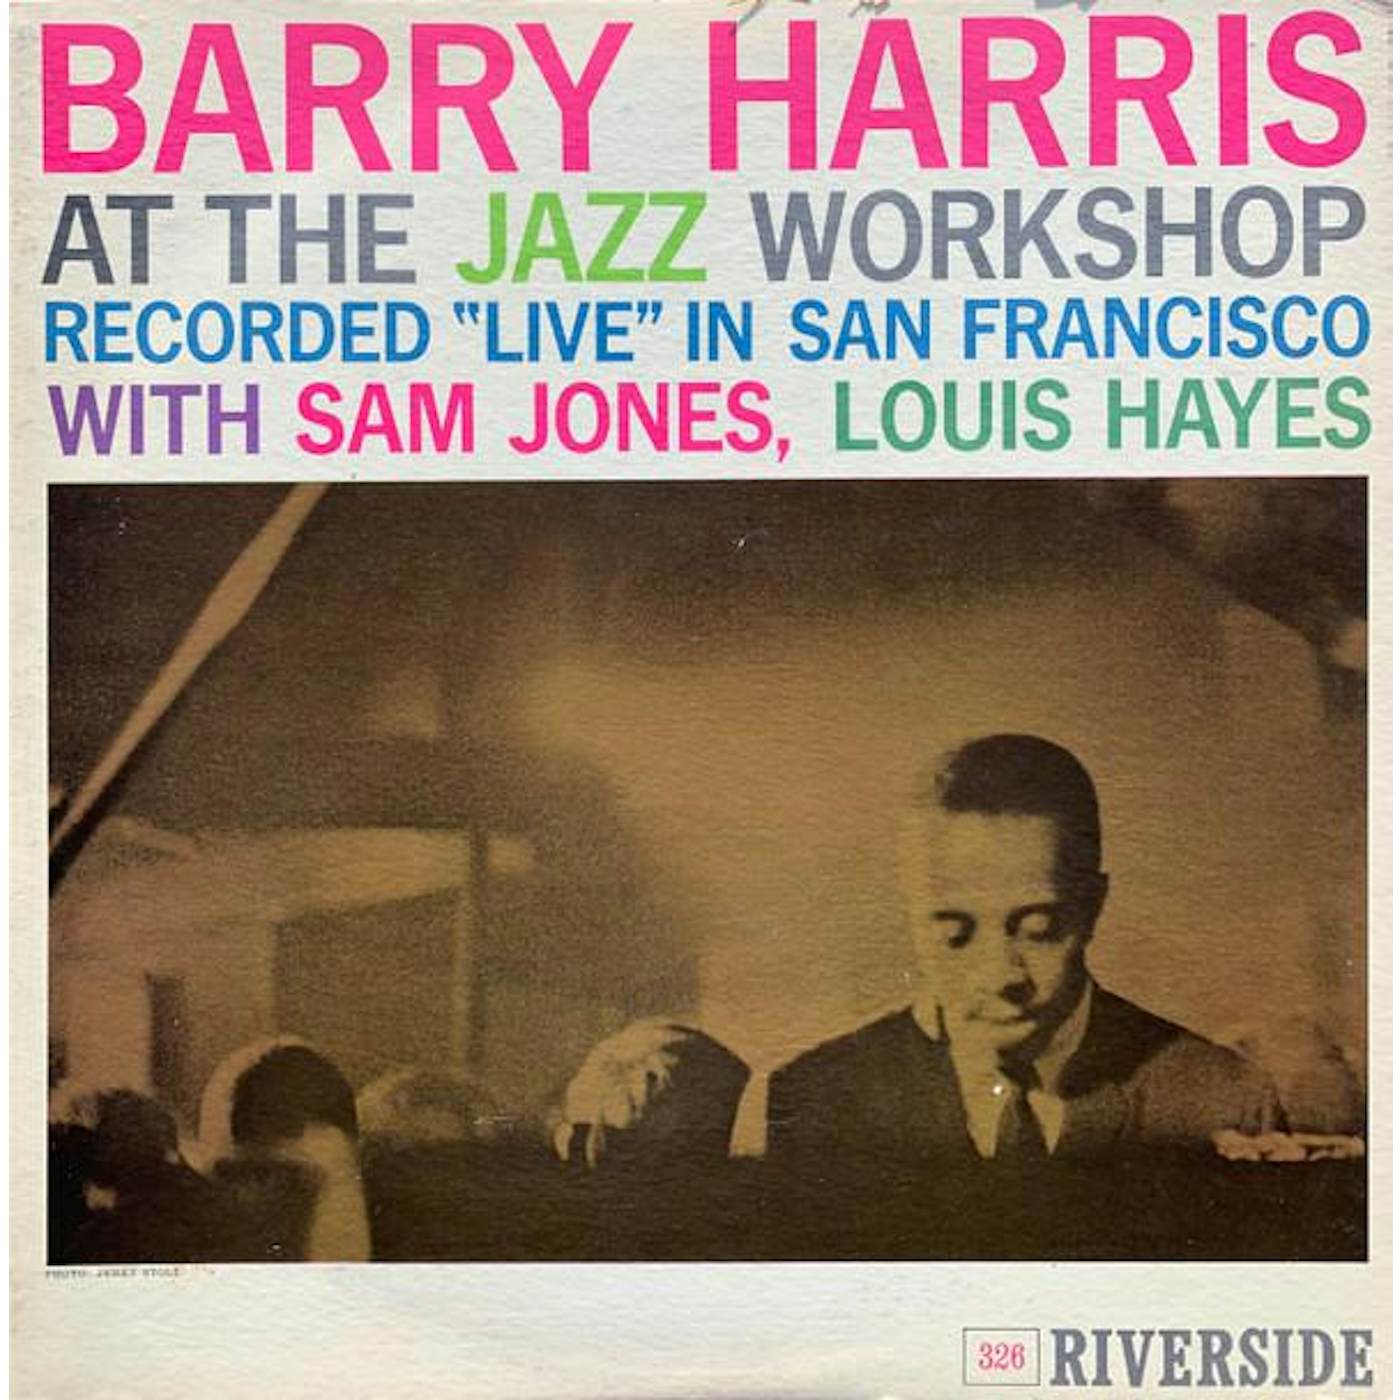 BARRY HARRIS AT JAZZ WORKSHOP CD